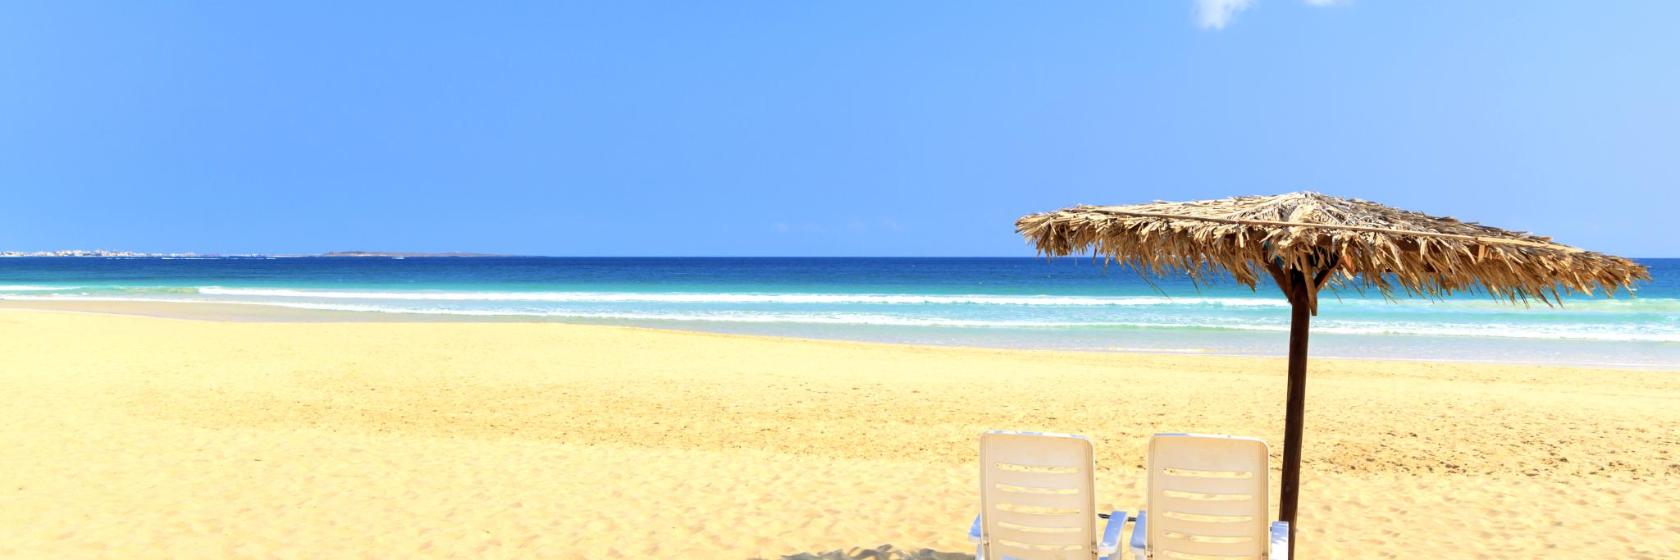 The 10 Best Boa Vista Hotels - Where To Stay on Boa Vista, Cape Verde